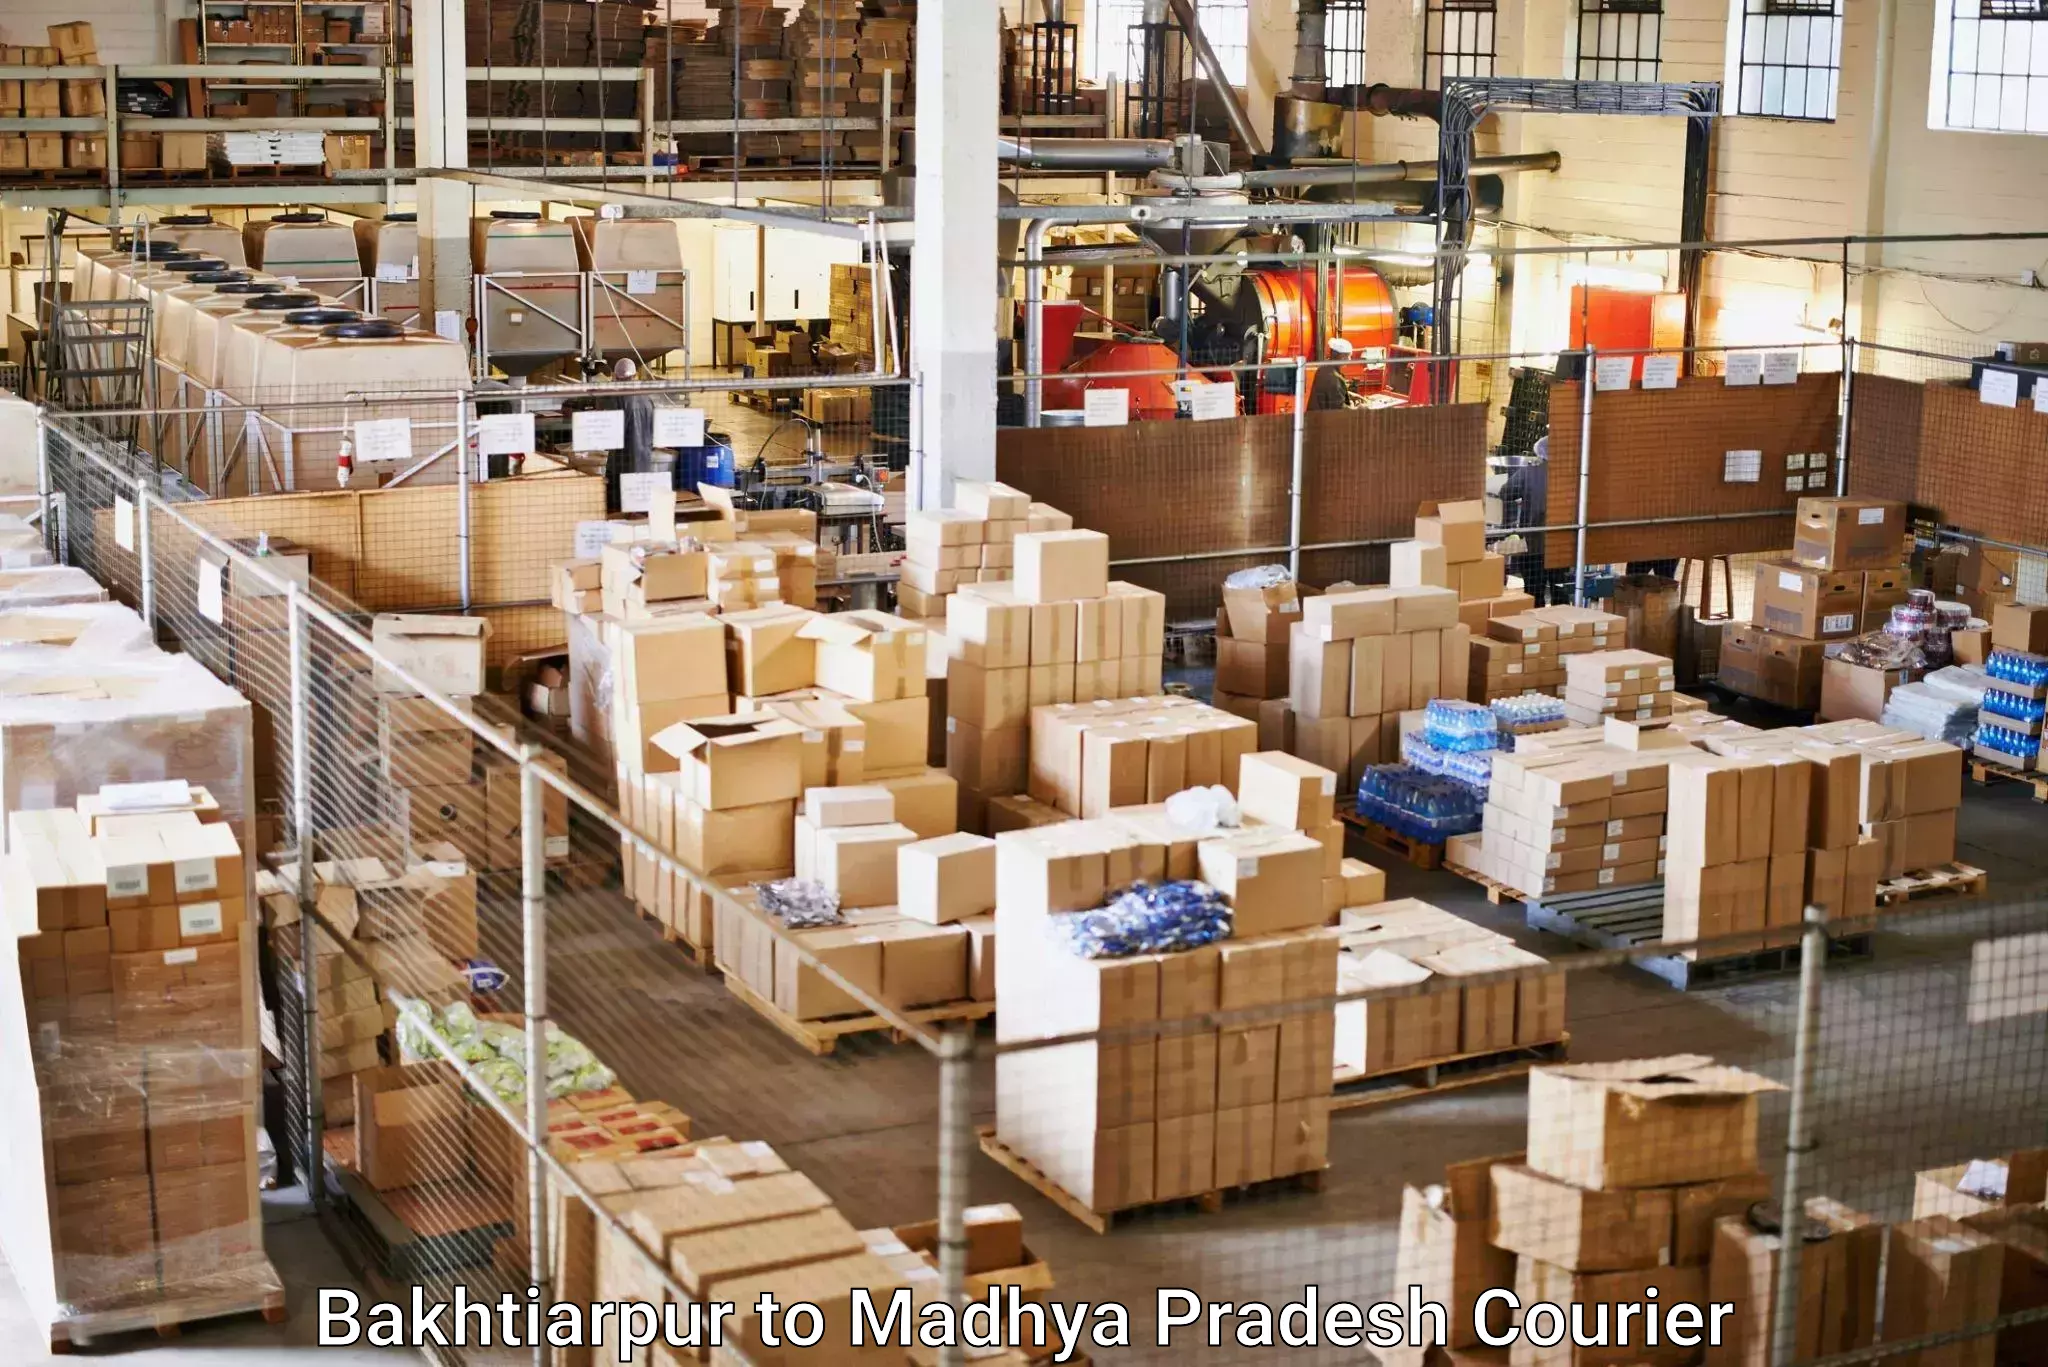 Flexible delivery scheduling Bakhtiarpur to Agar